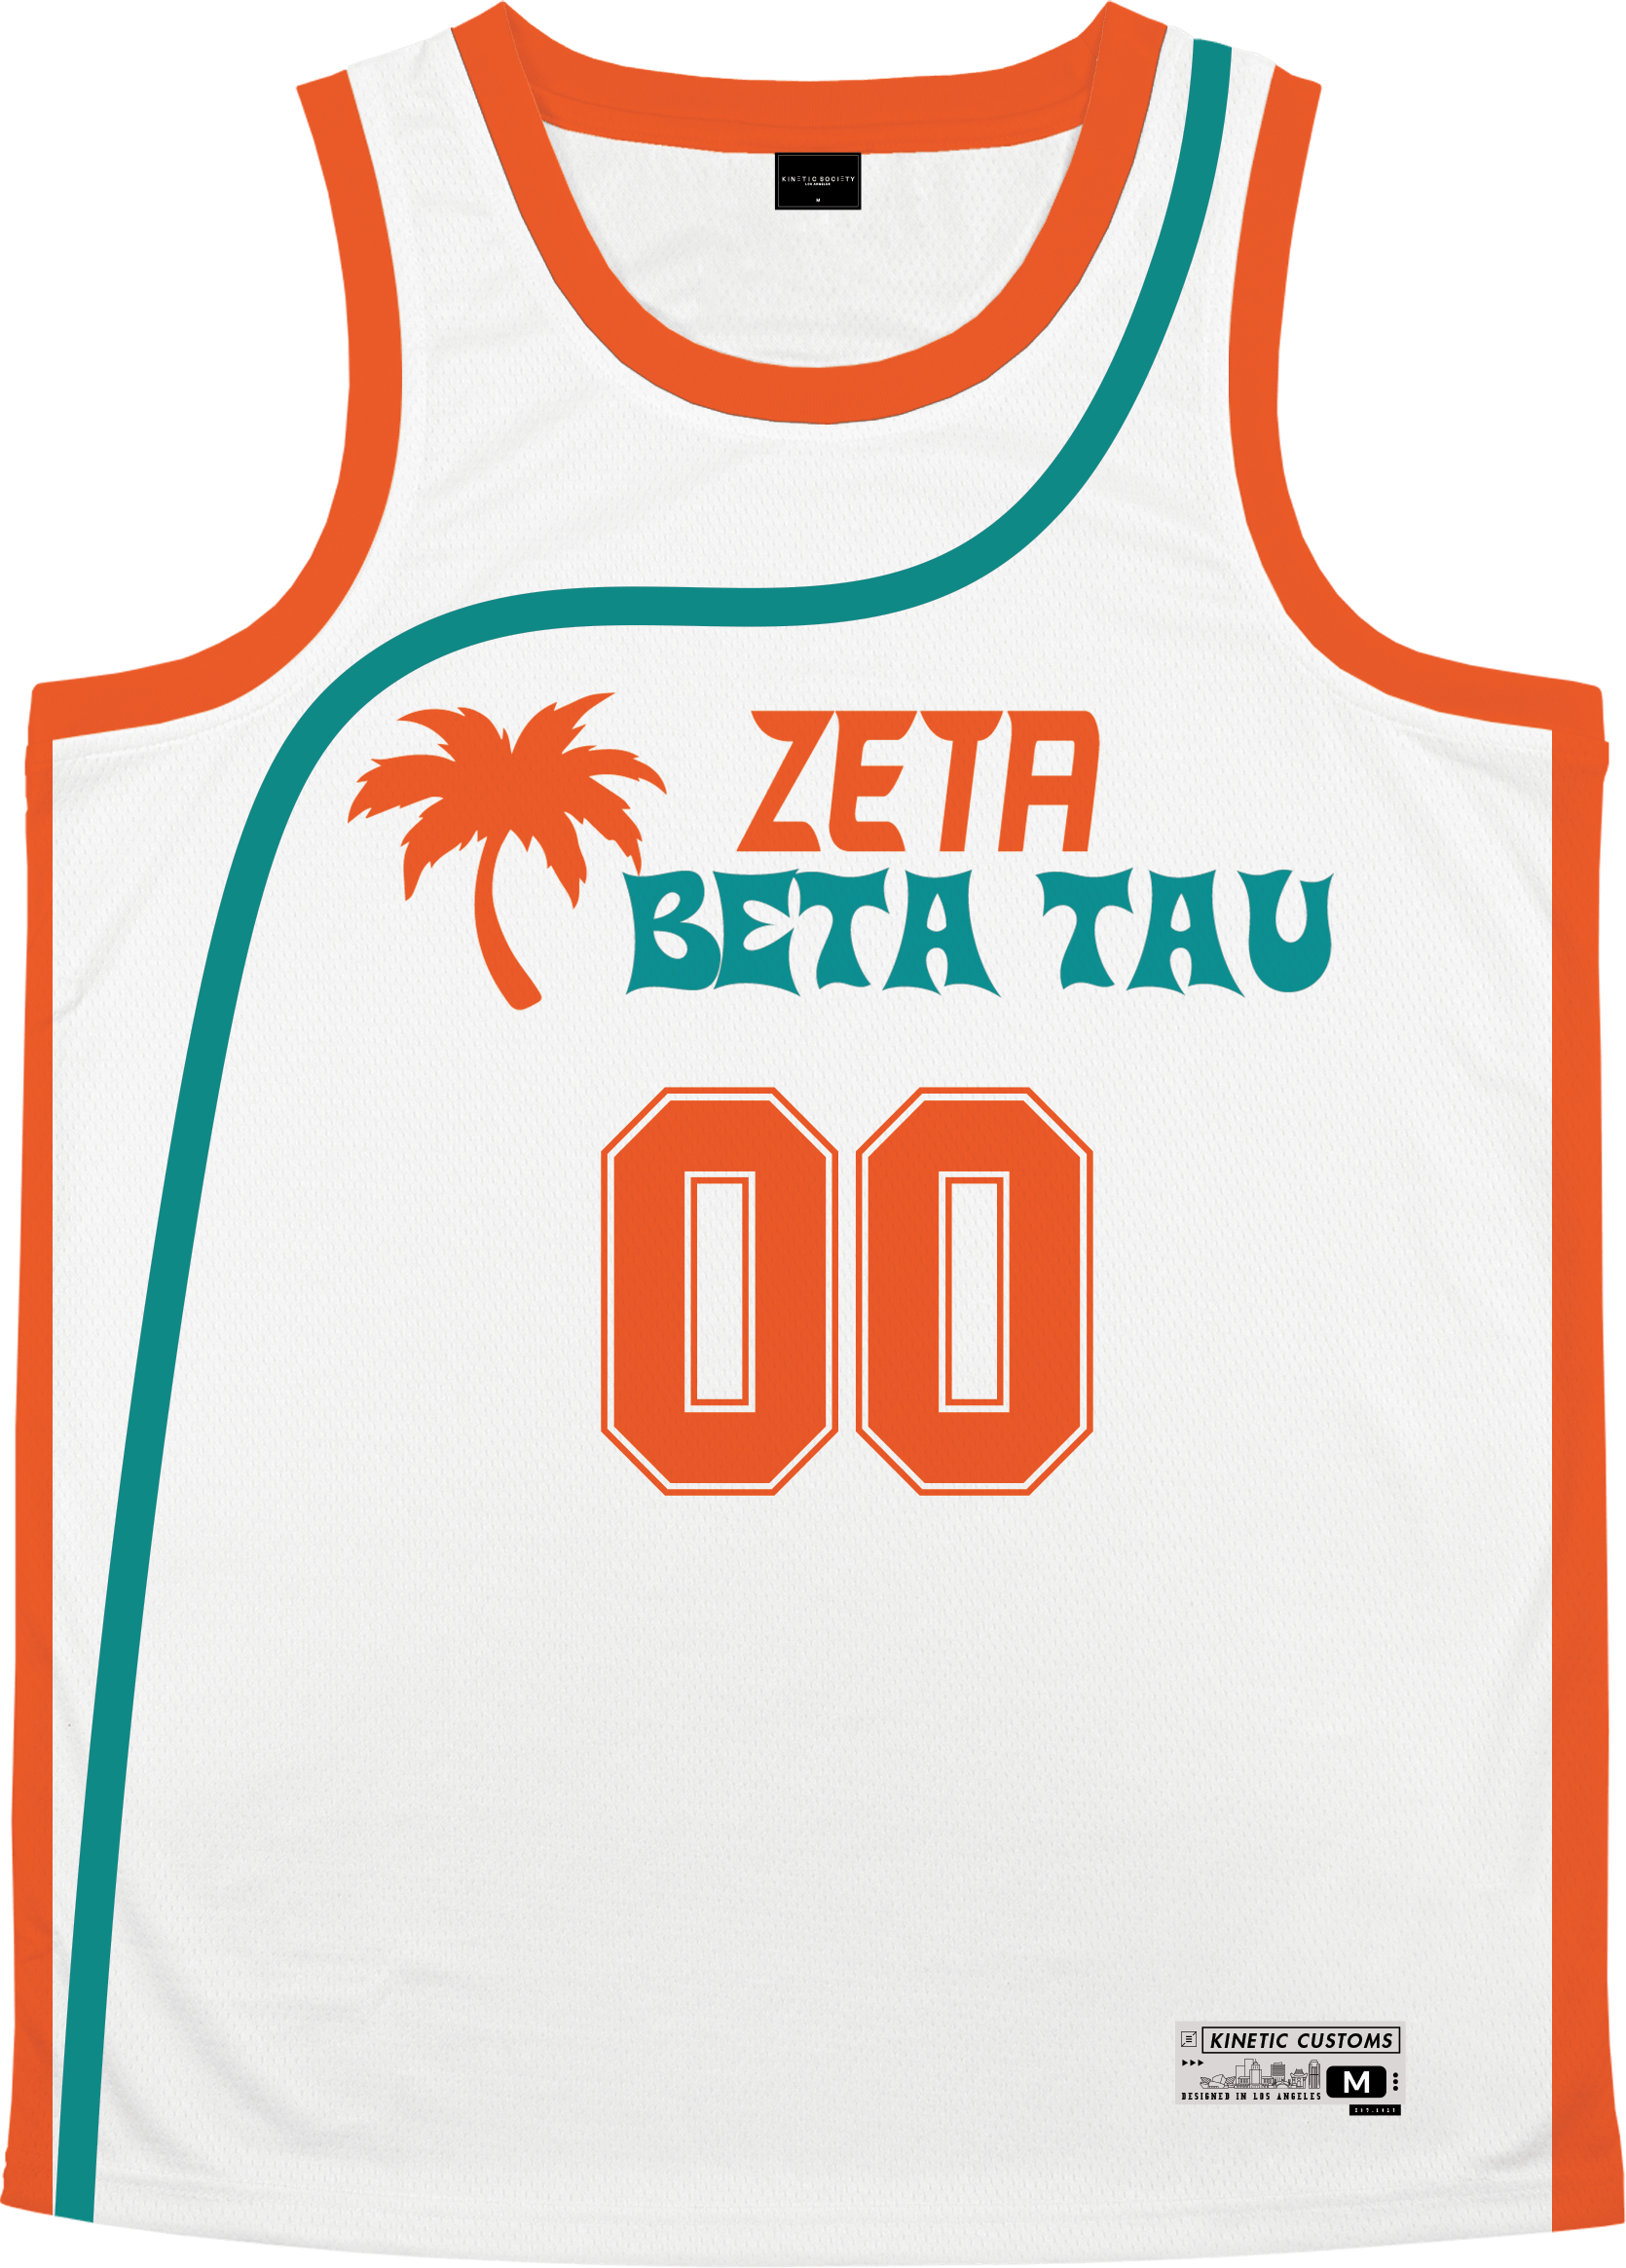 Zeta Beta Tau - Tropical Basketball Jersey Premium Basketball Kinetic Society LLC 